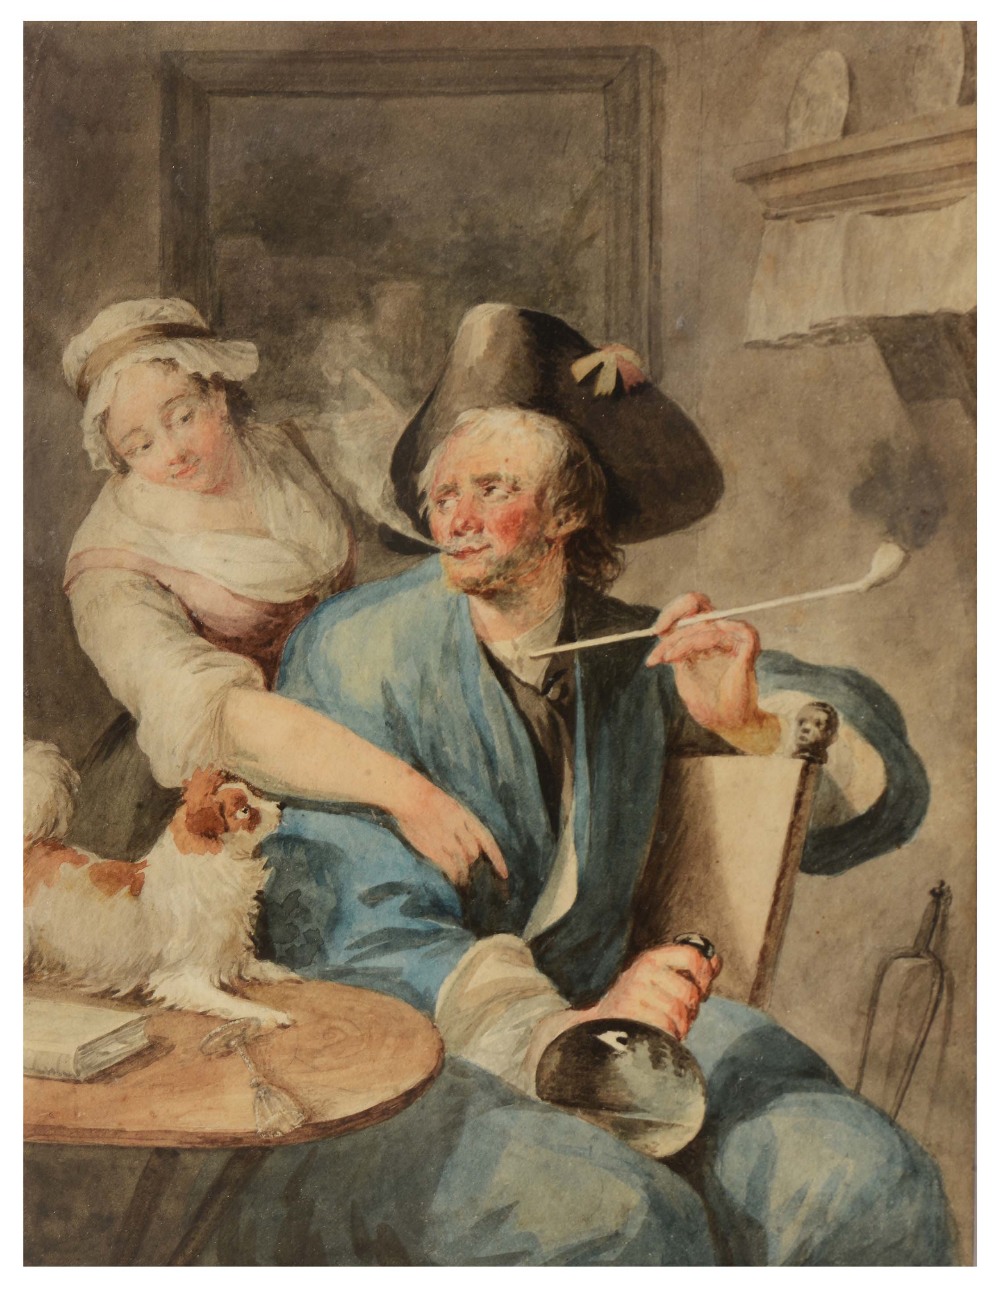 FOLLOWER OF THOMAS ROWLANDSON (1756-1827) A mischievous moment, watercolour, 22.5 x 17.5cm